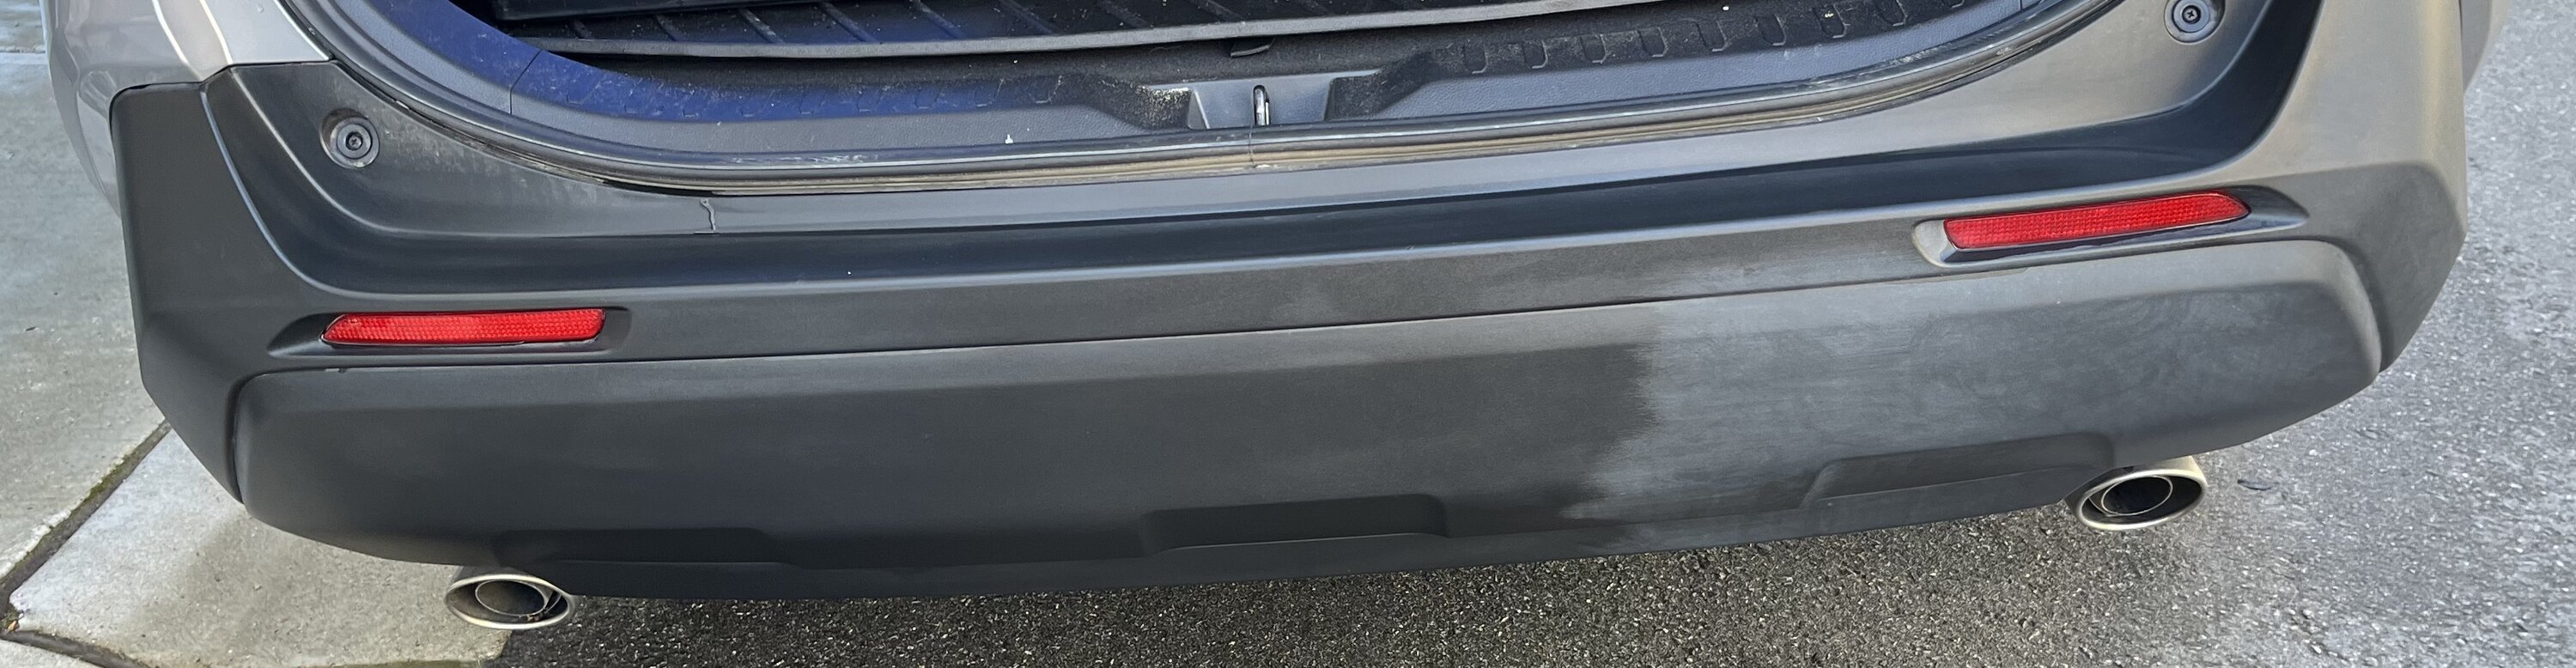 Ford Bronco Seatbelts marking up door panels IMG_1826